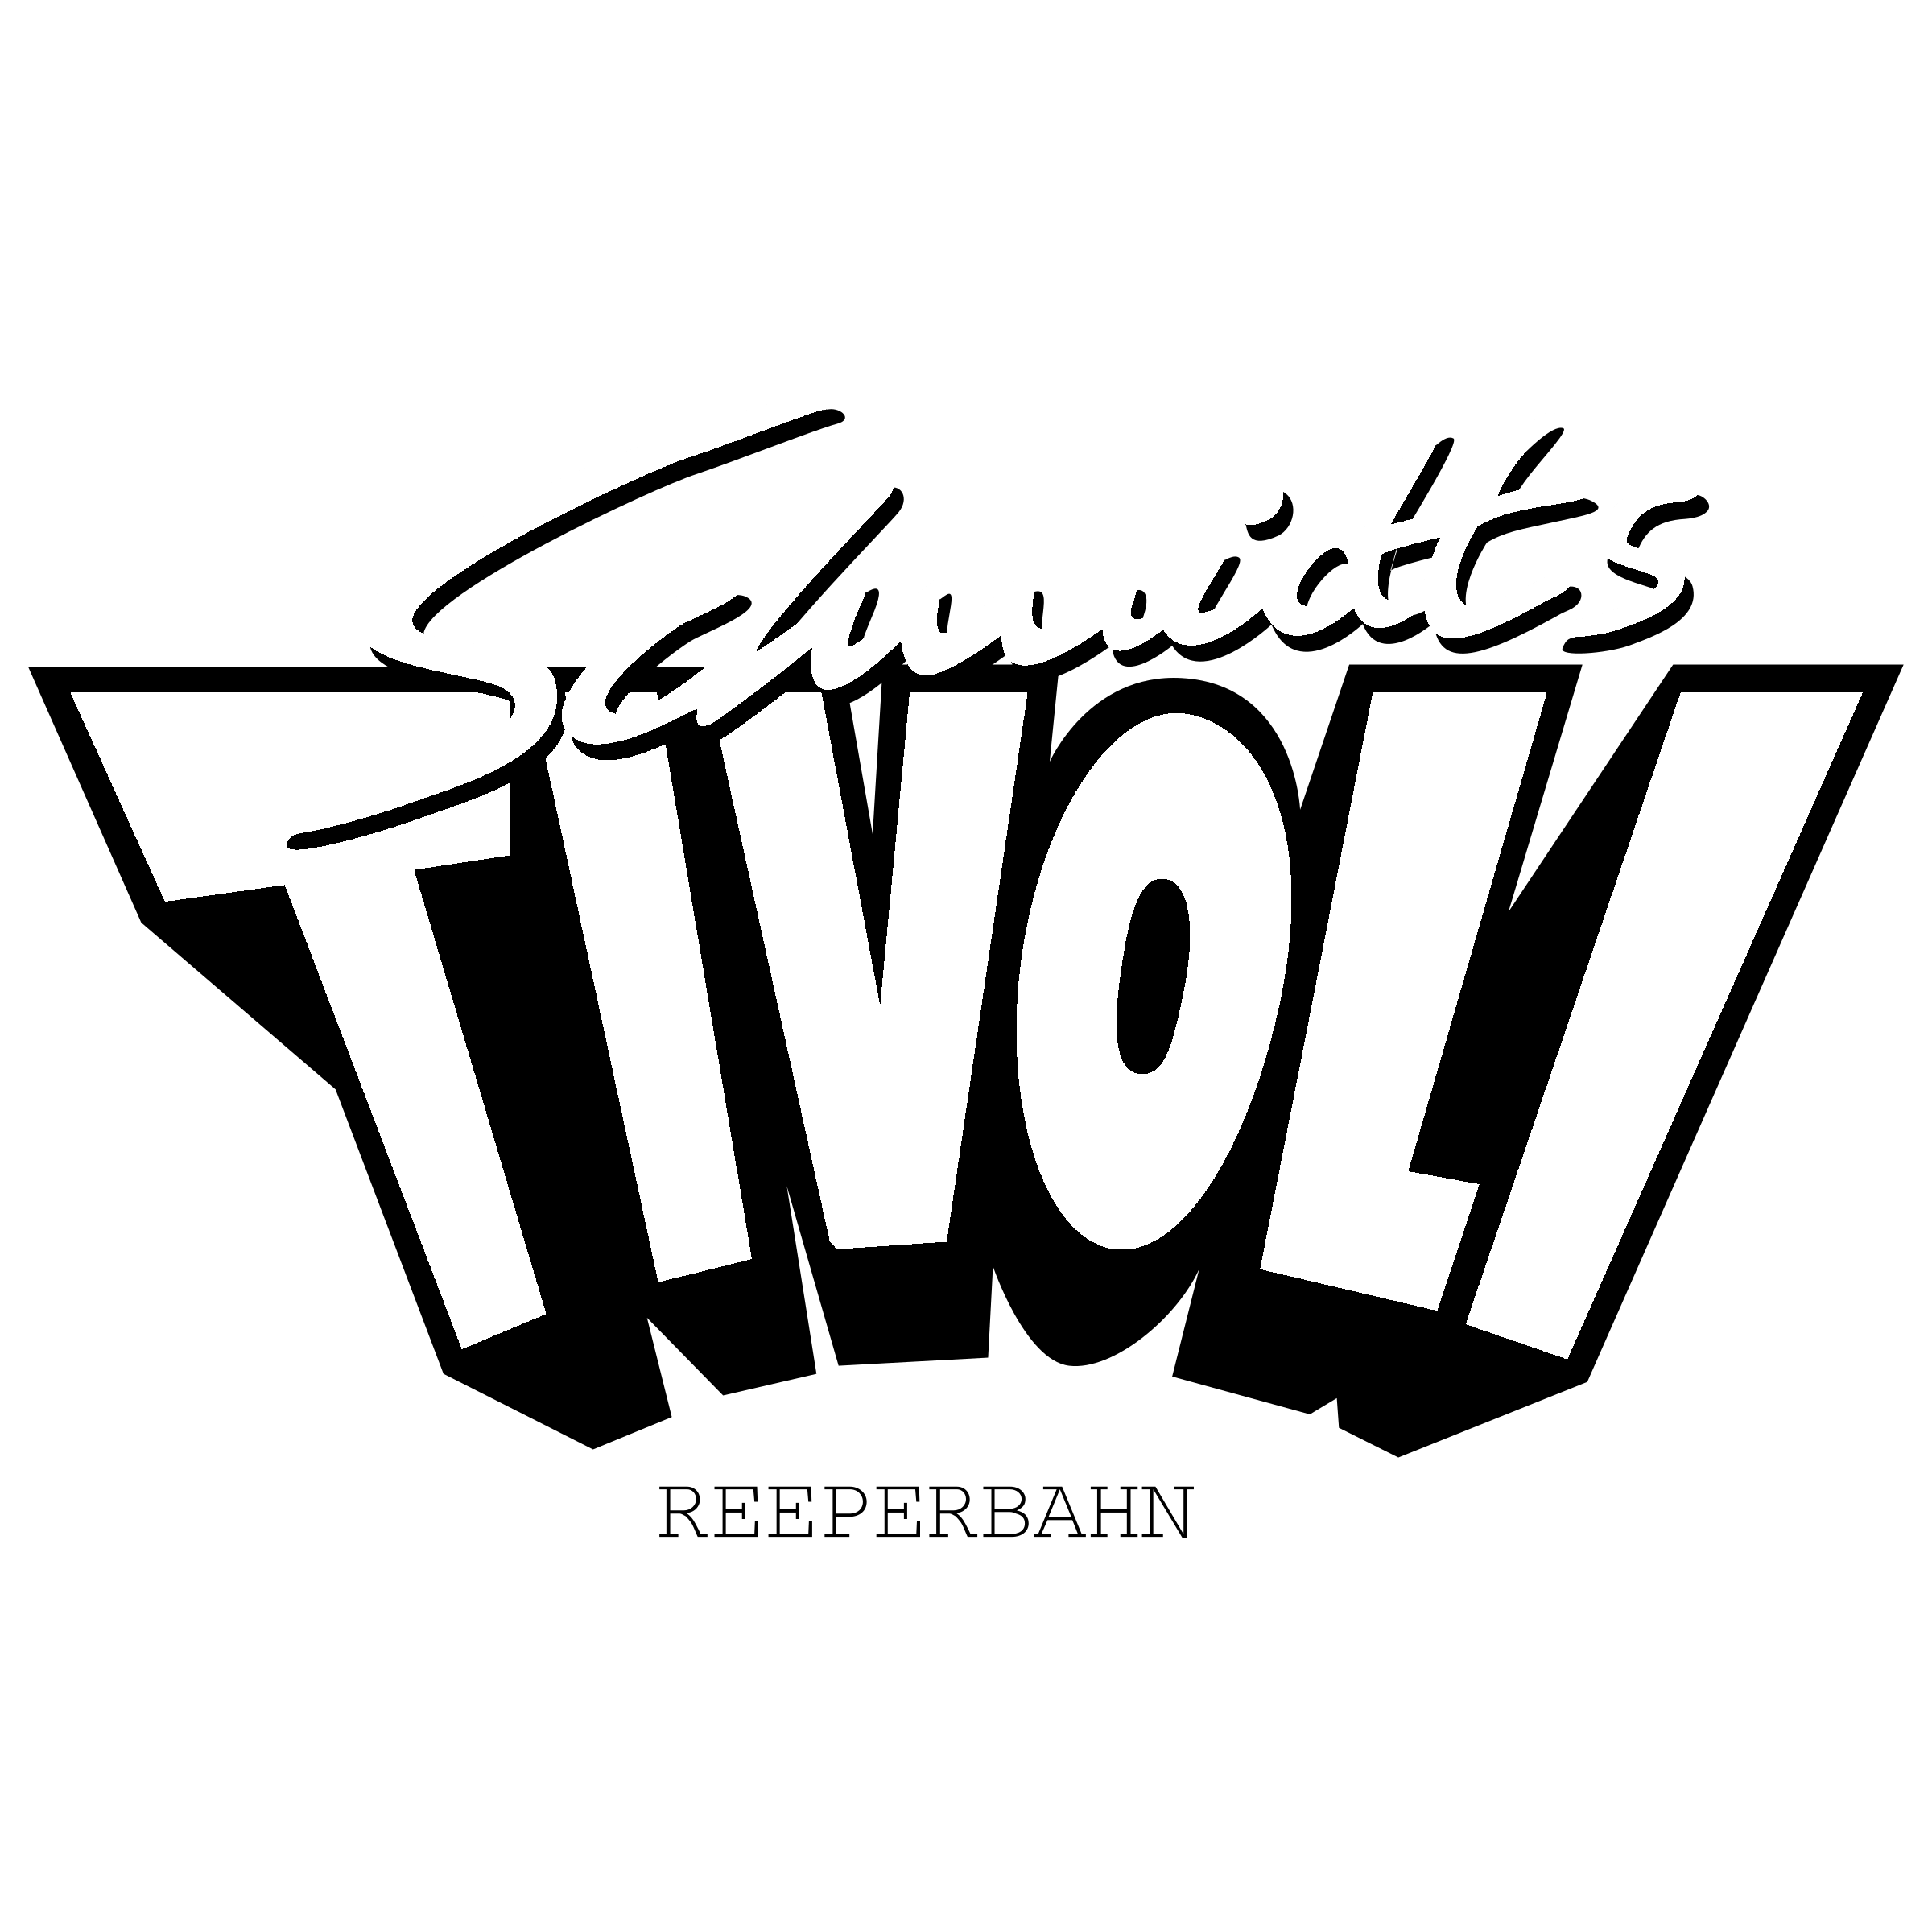 Tivoli Logo - Tivoli Logo PNG Transparent & SVG Vector